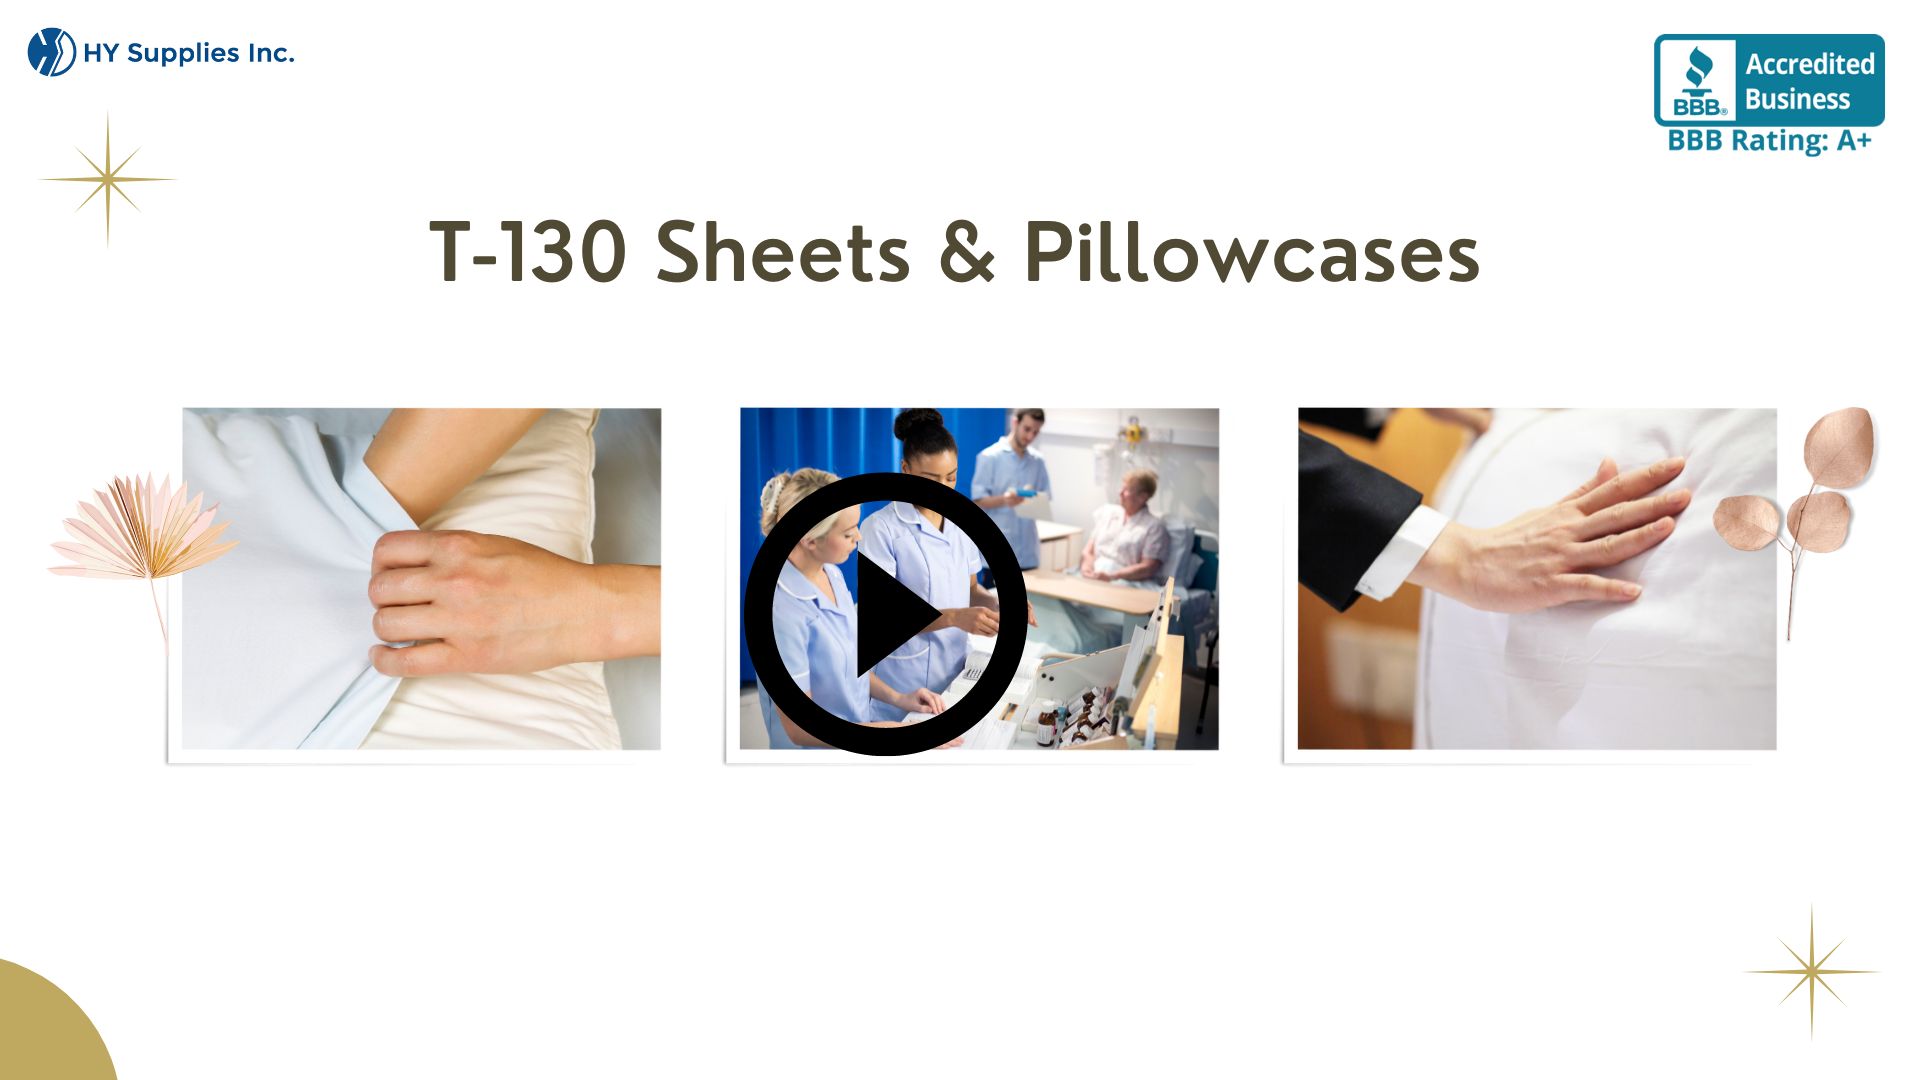 T-130 Sheets & Pillowcases